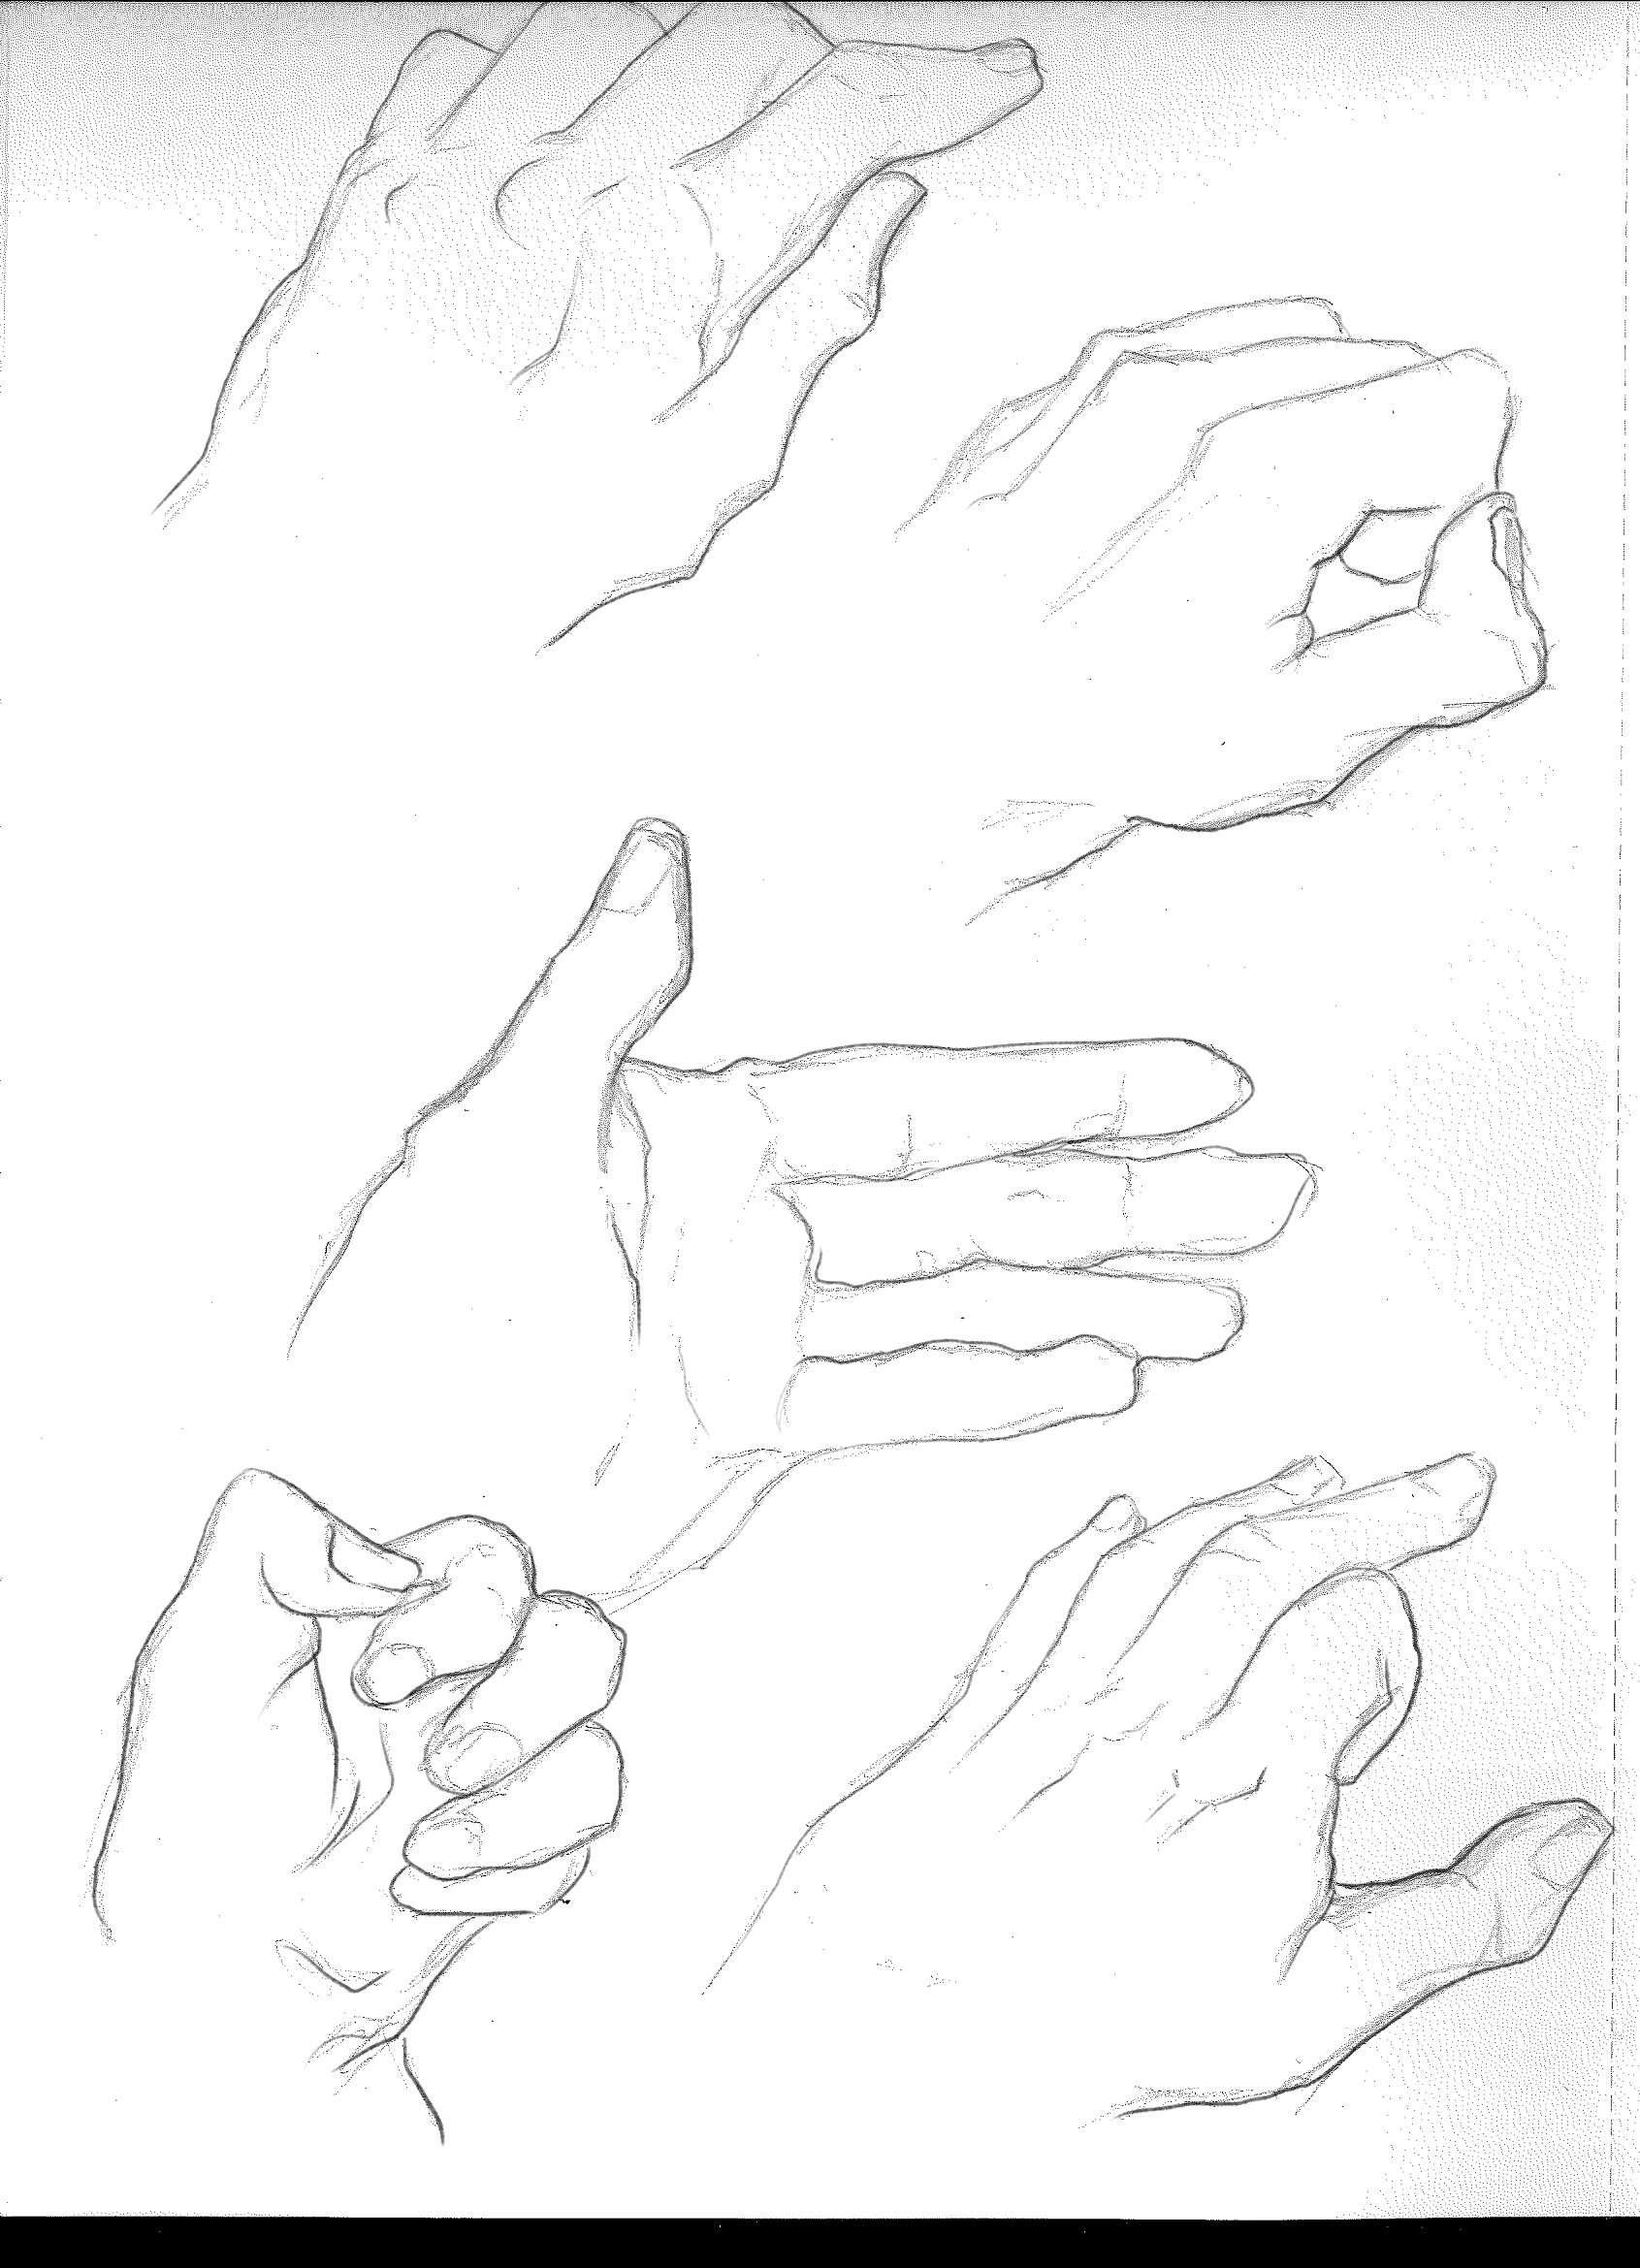 ArtStation - Hand studies, traditional